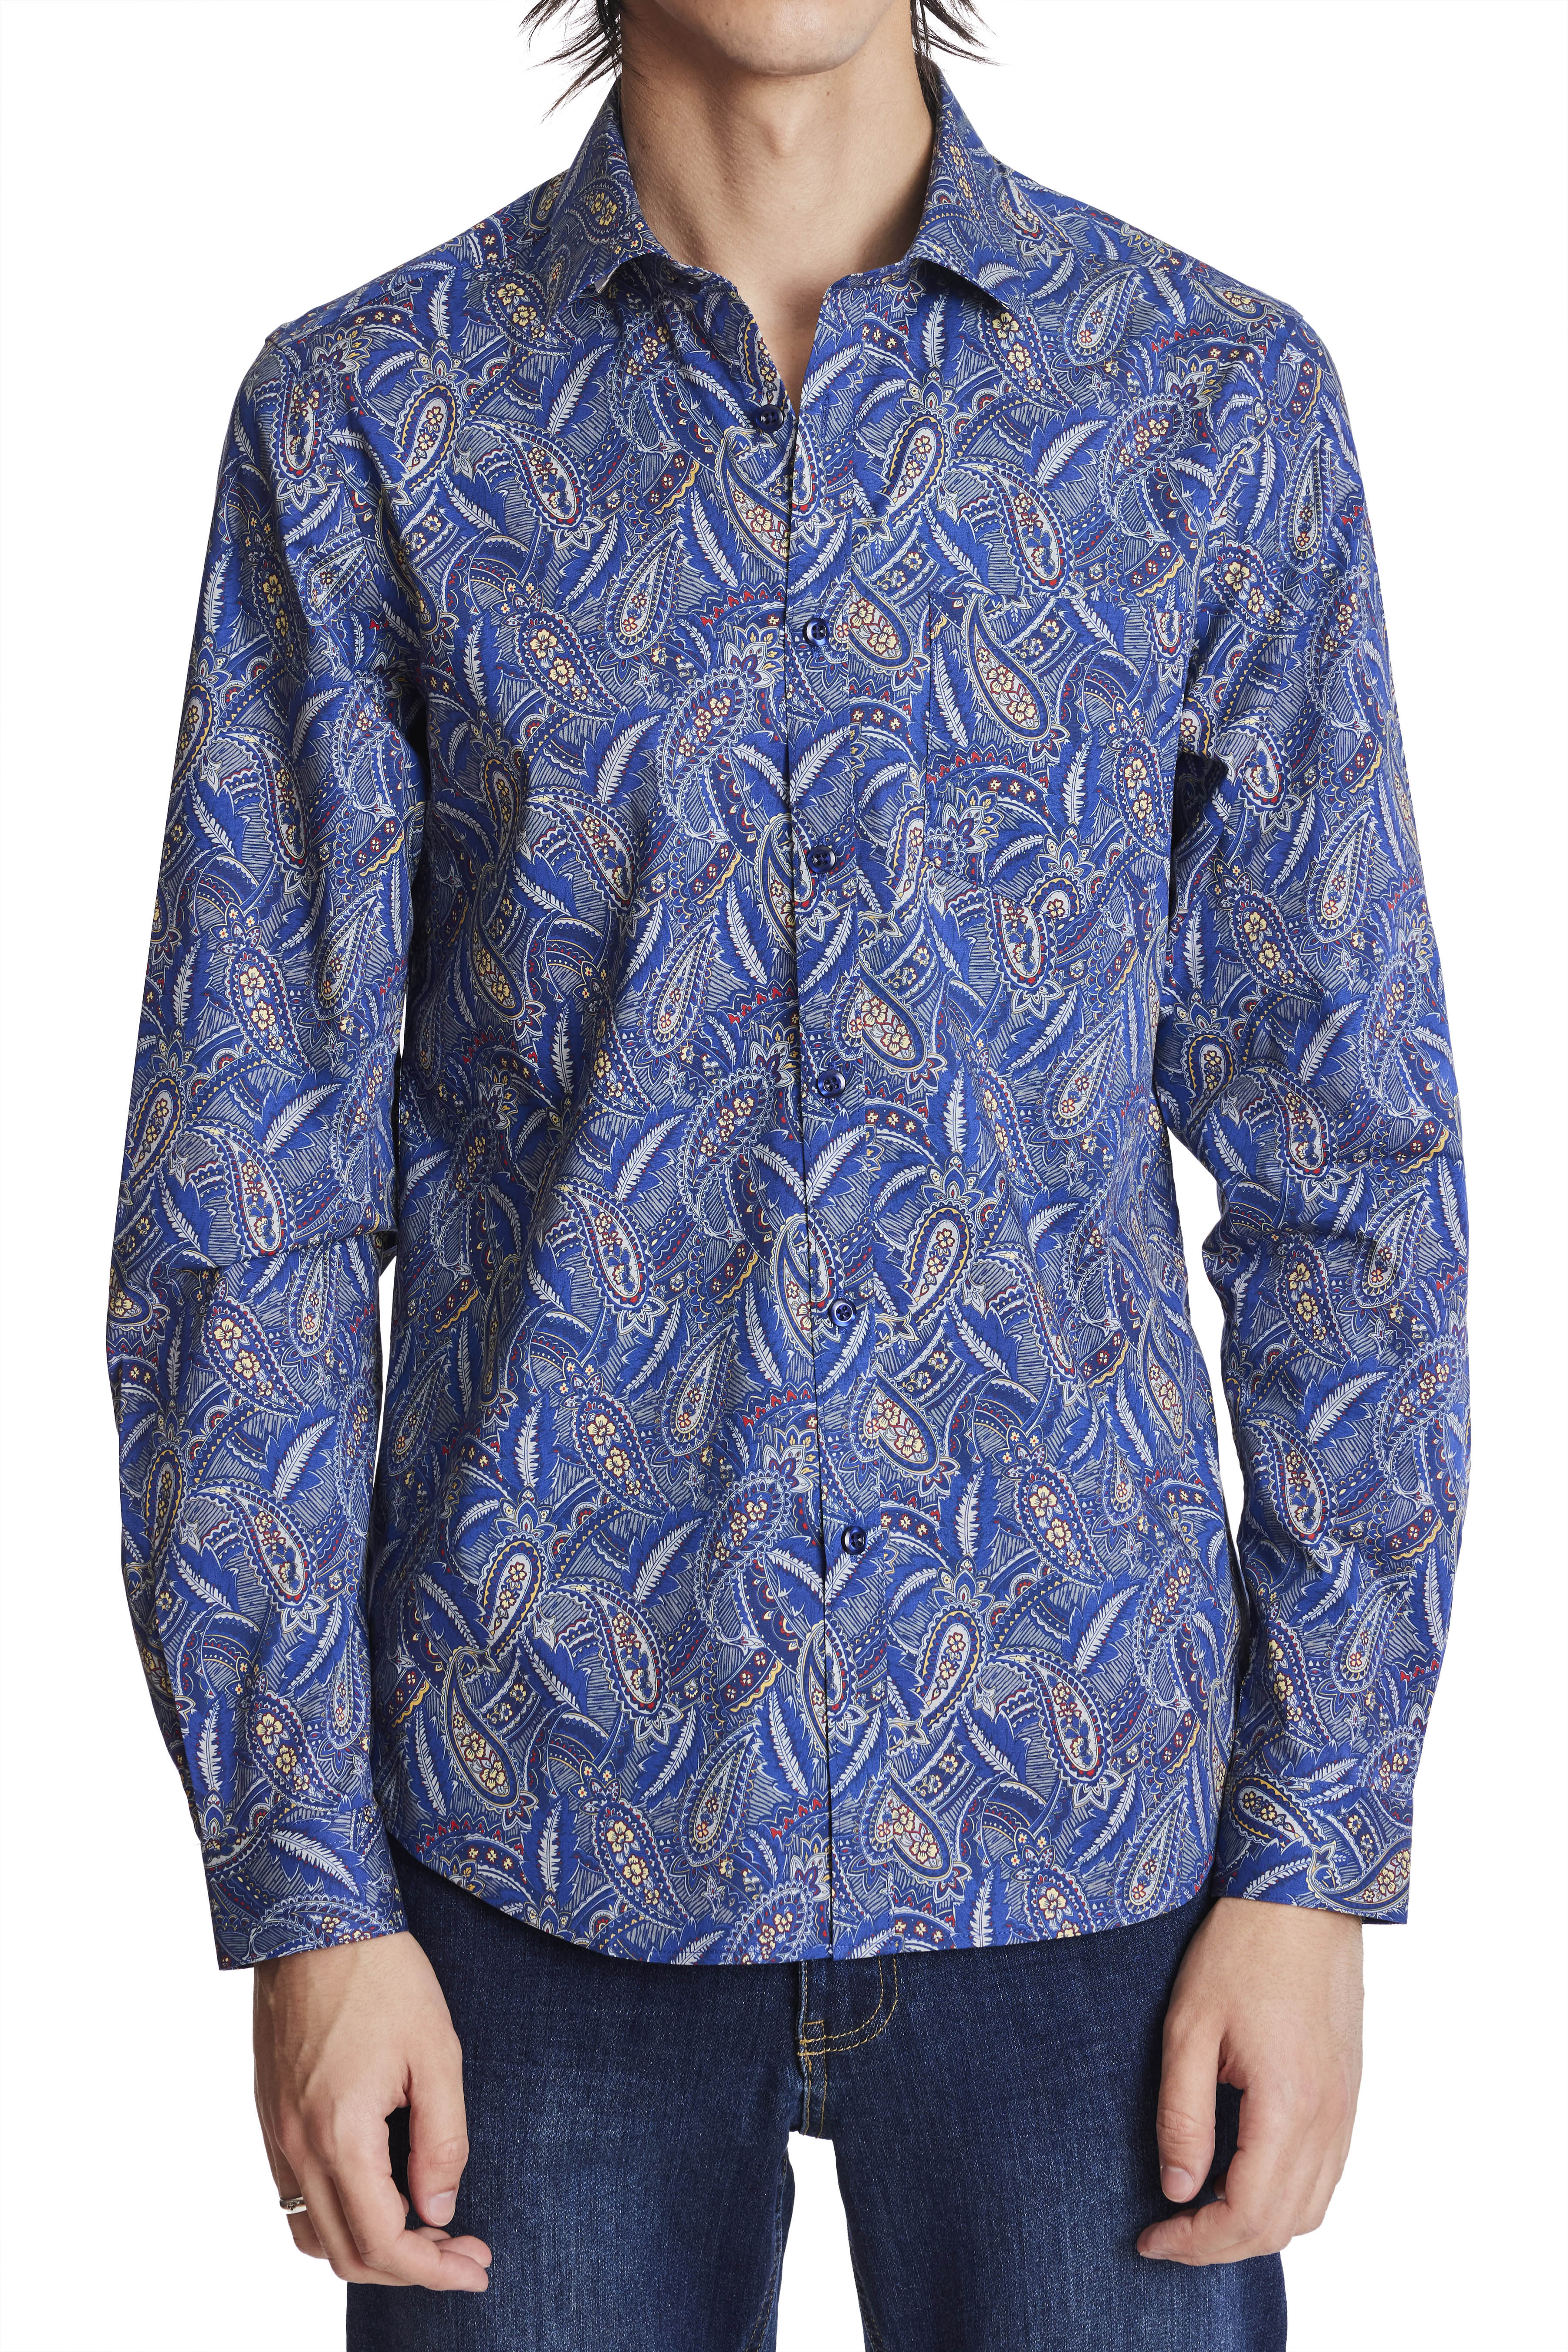 Samuel Spread Collar Shirt - New Blue Paisley – Paisley & Gray